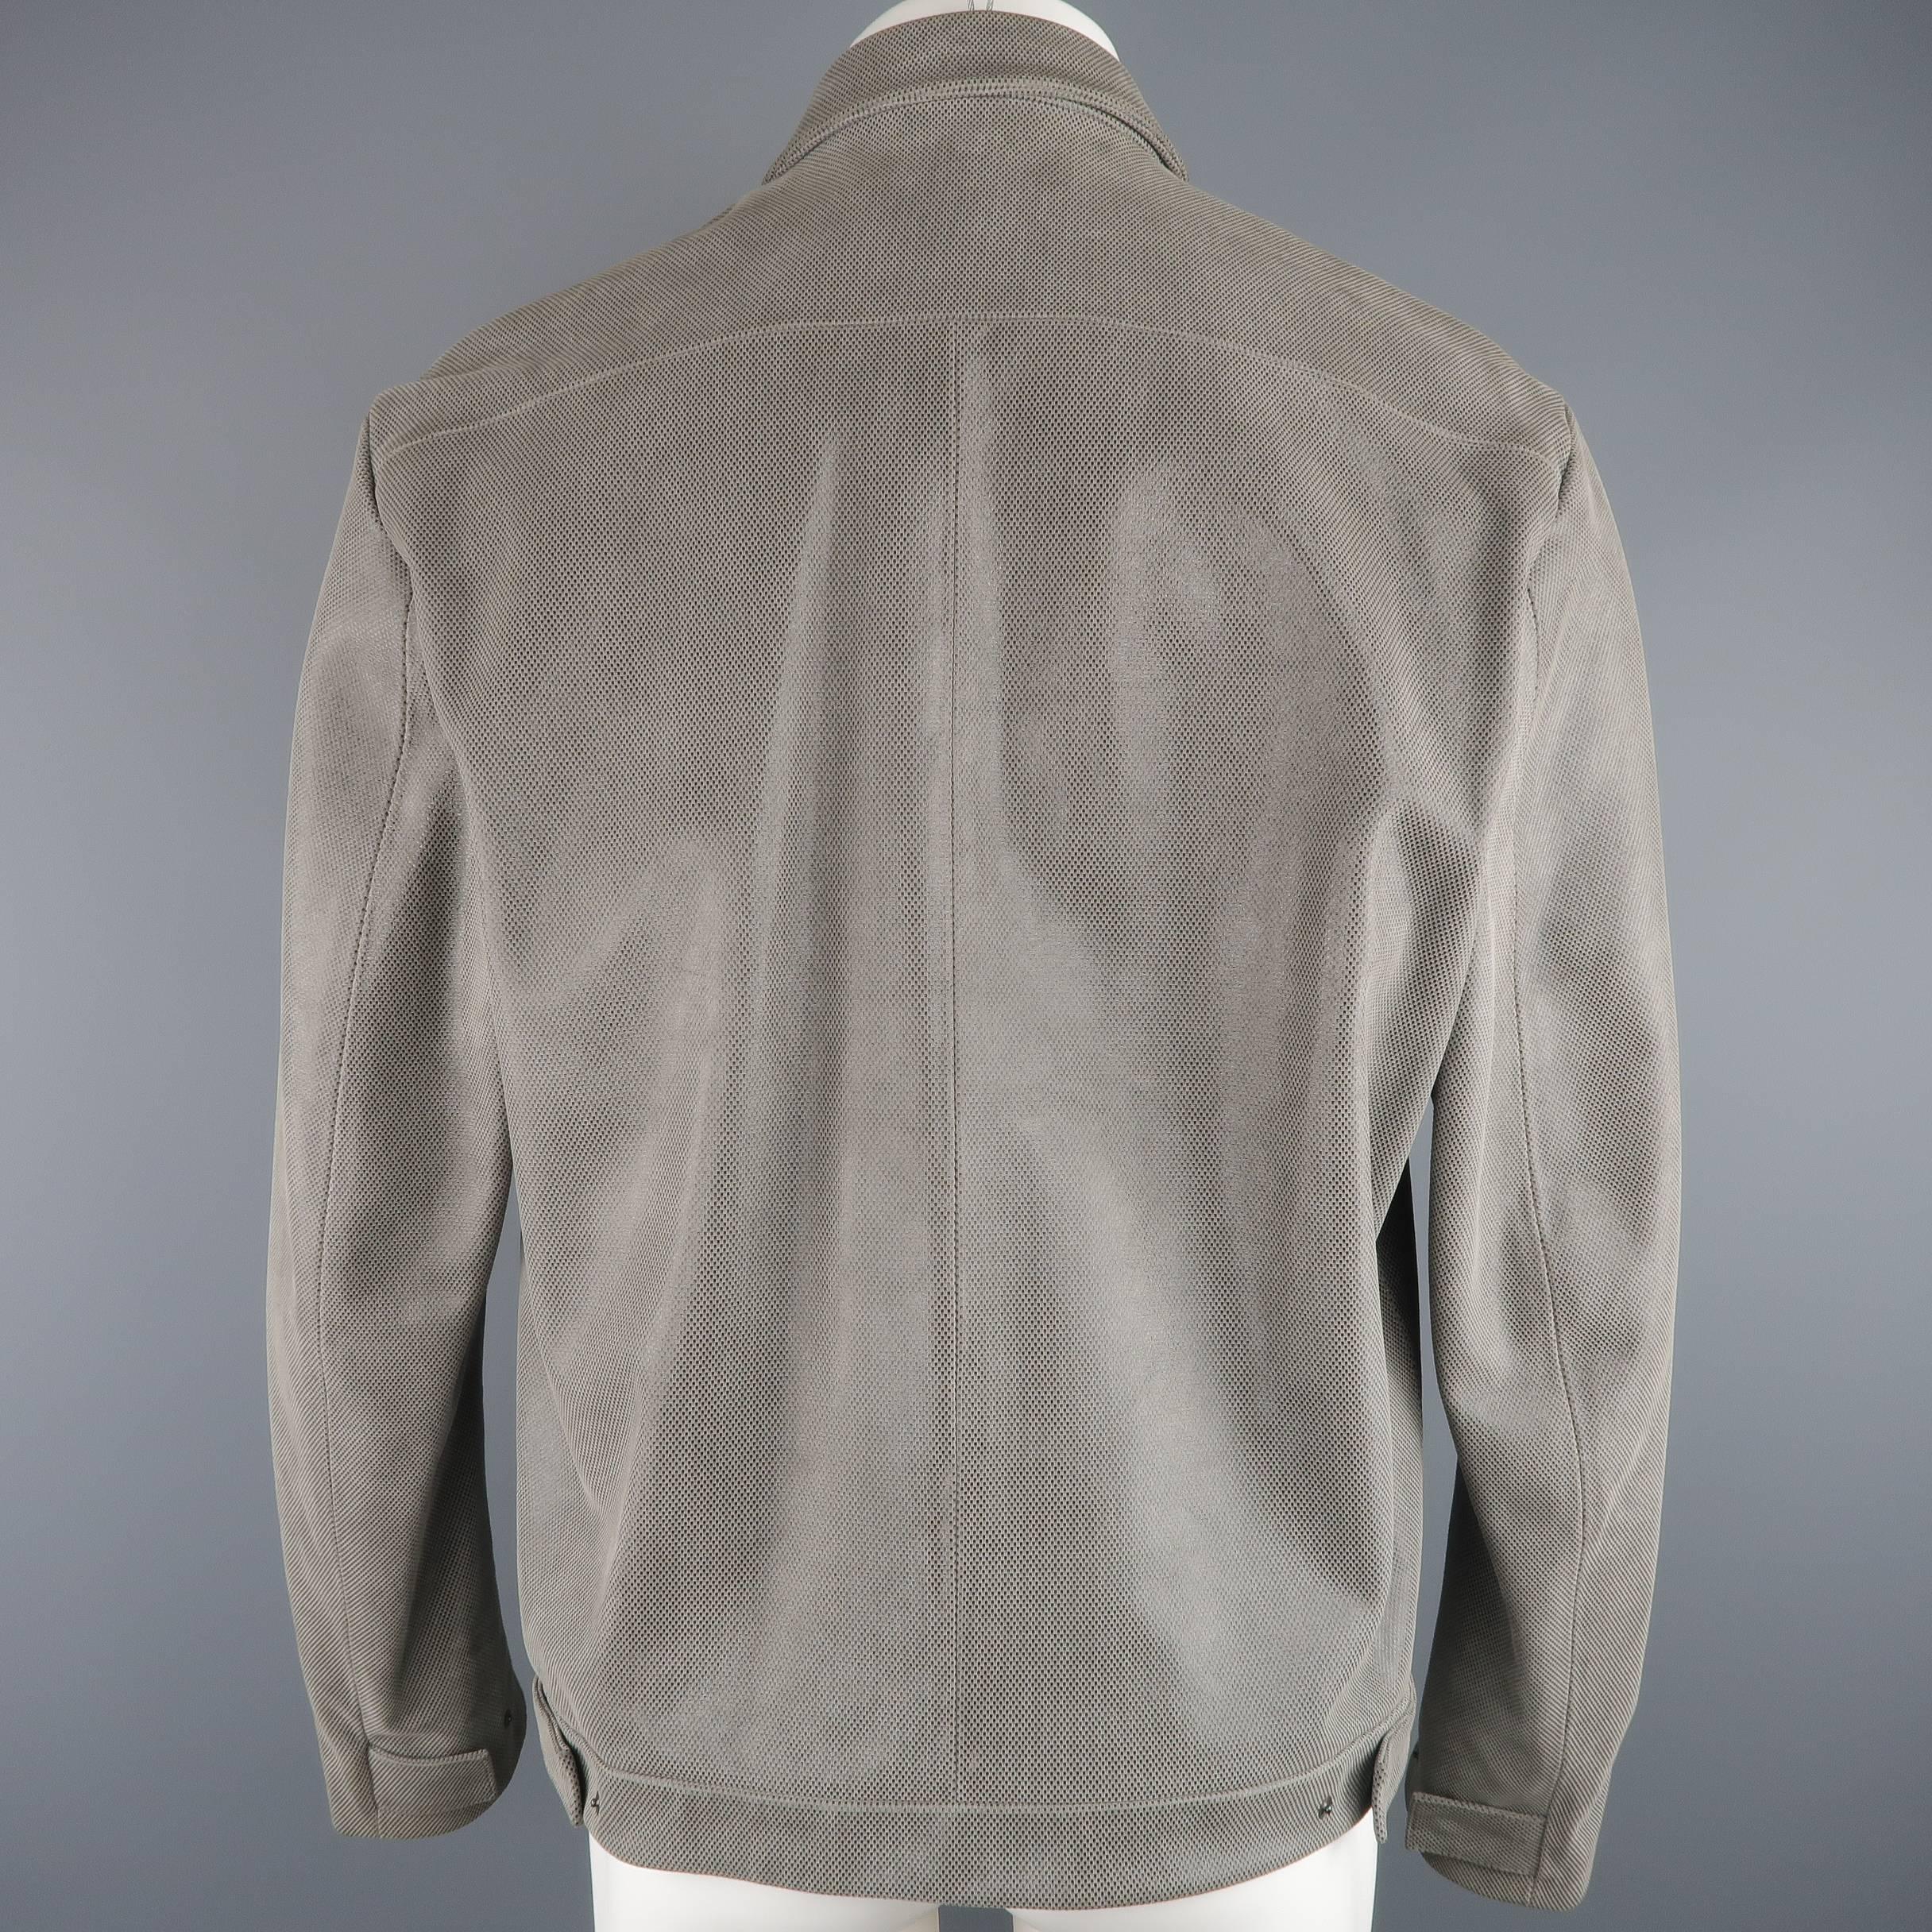 Calvin Klein Collection Jacket Grey and Black Metallic Leather Jacket   1